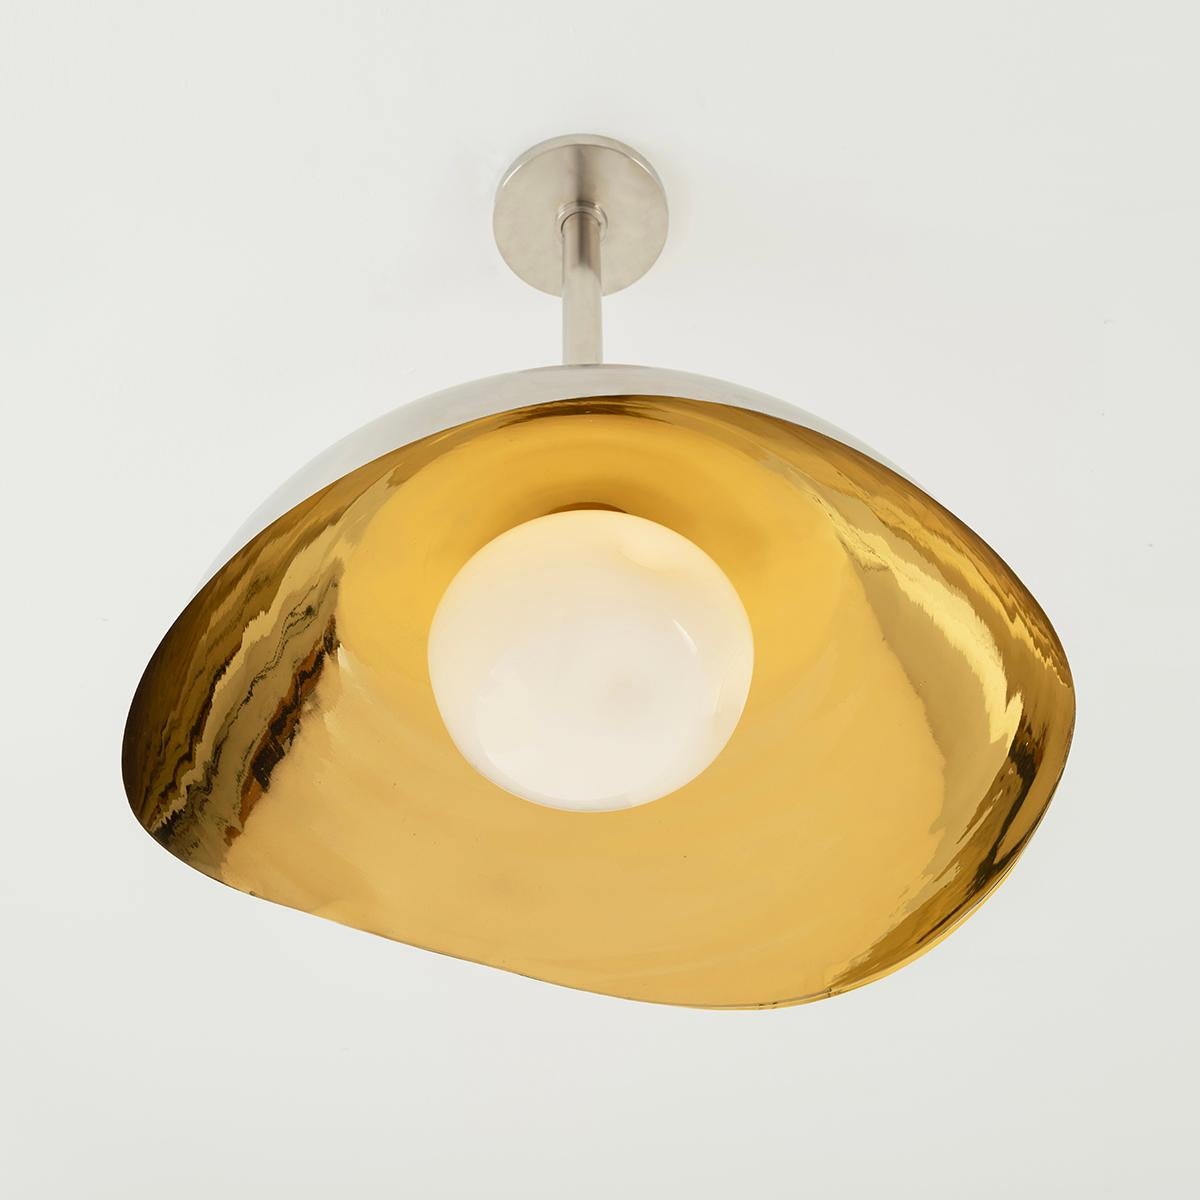 Perla Grande Ceiling Light - Polished Brass Interior and Satin Nickel Exterior For Sale 2